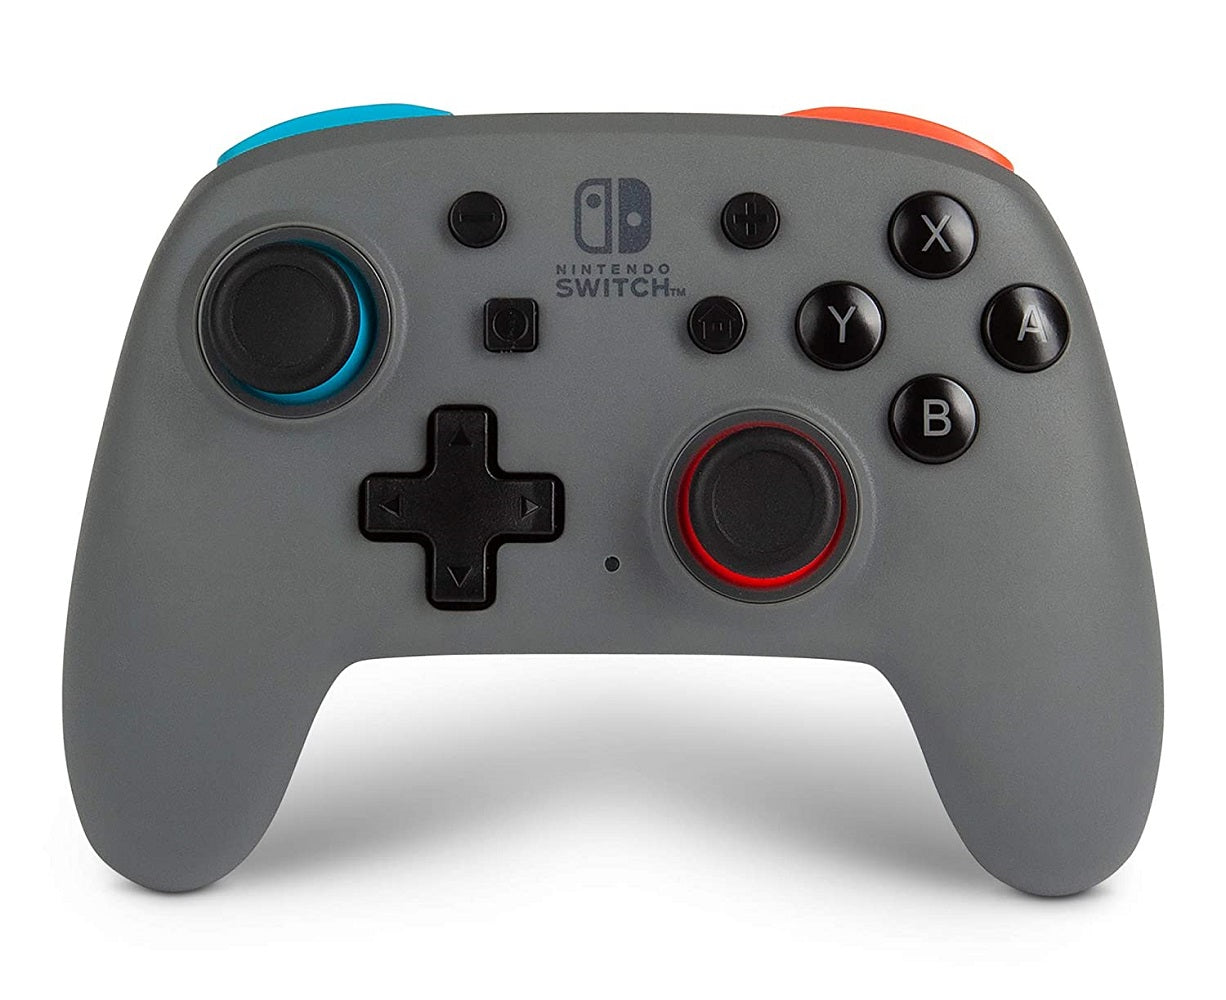 PowerA Nano Enhanced Wireless Controller for Nintendo Switch - Grey-Neon (Certified Refurbished)